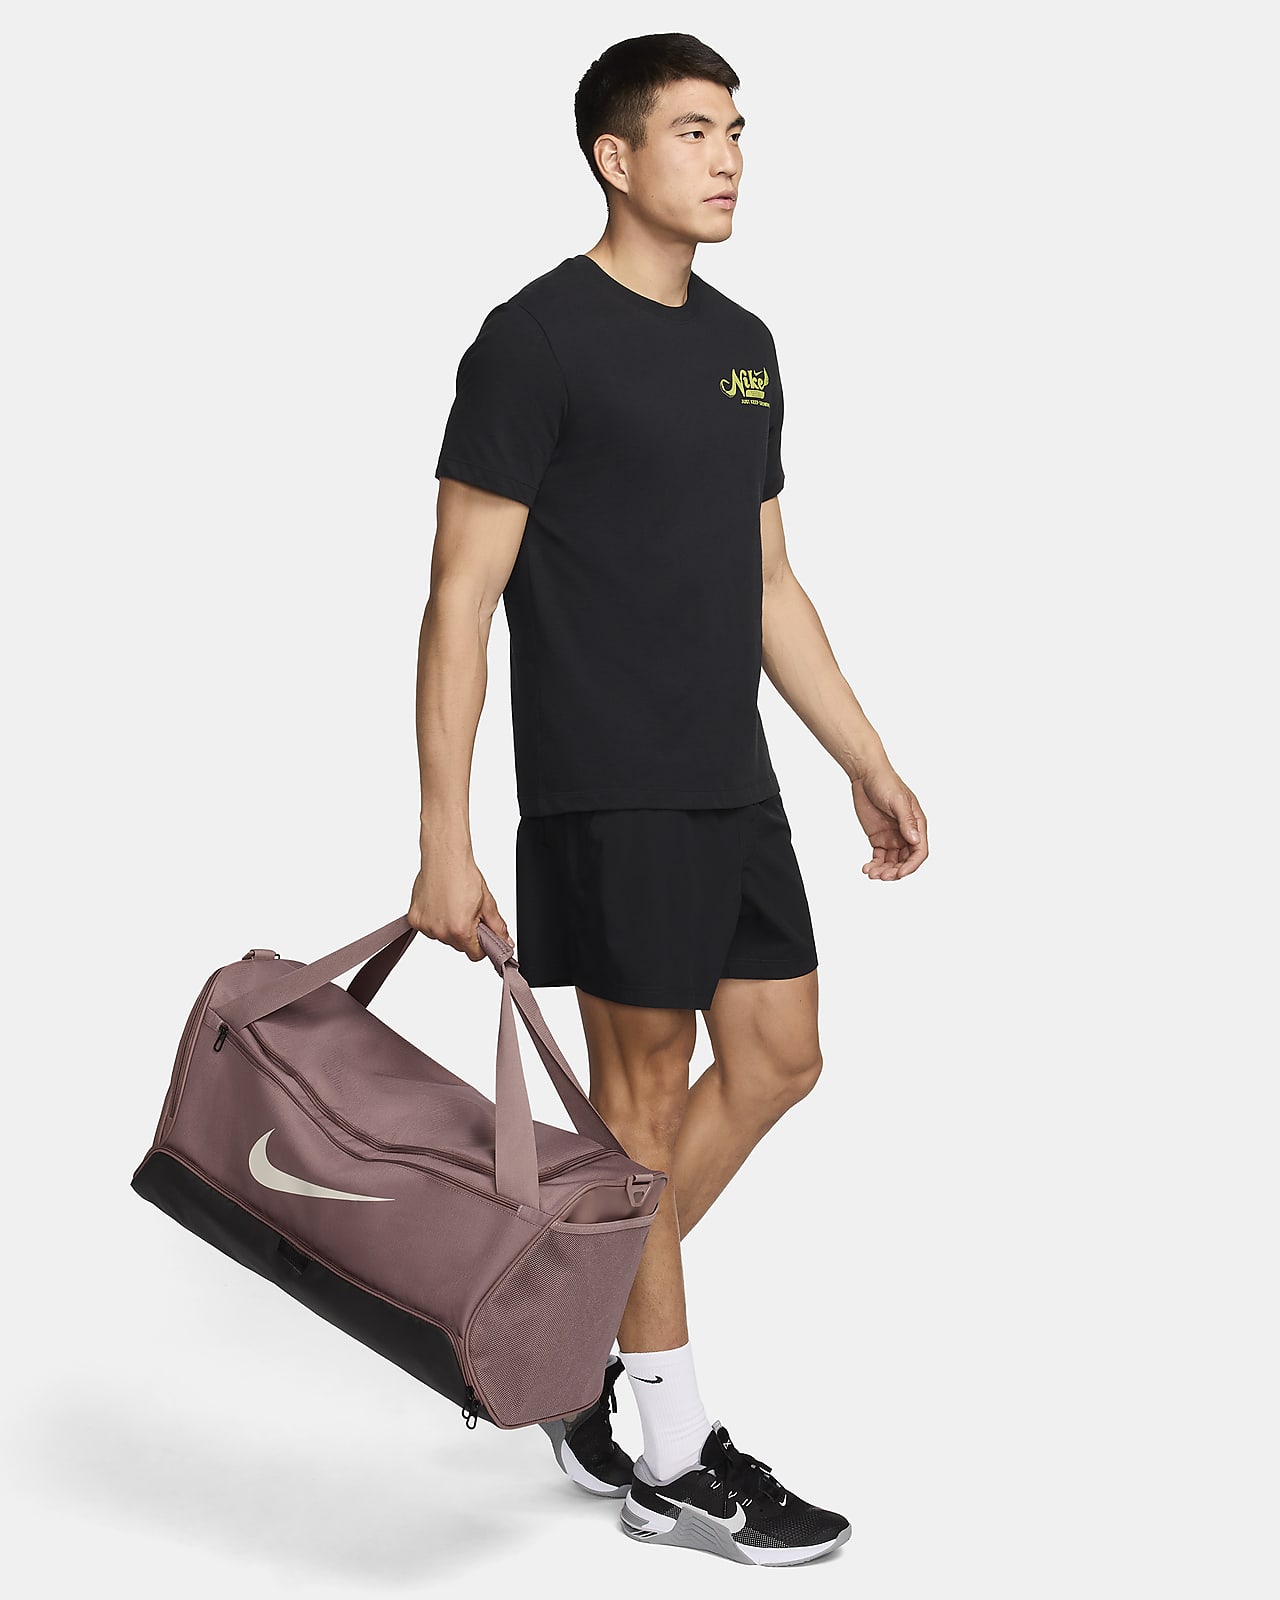 Nike Brasilia Duffle Bag - 010